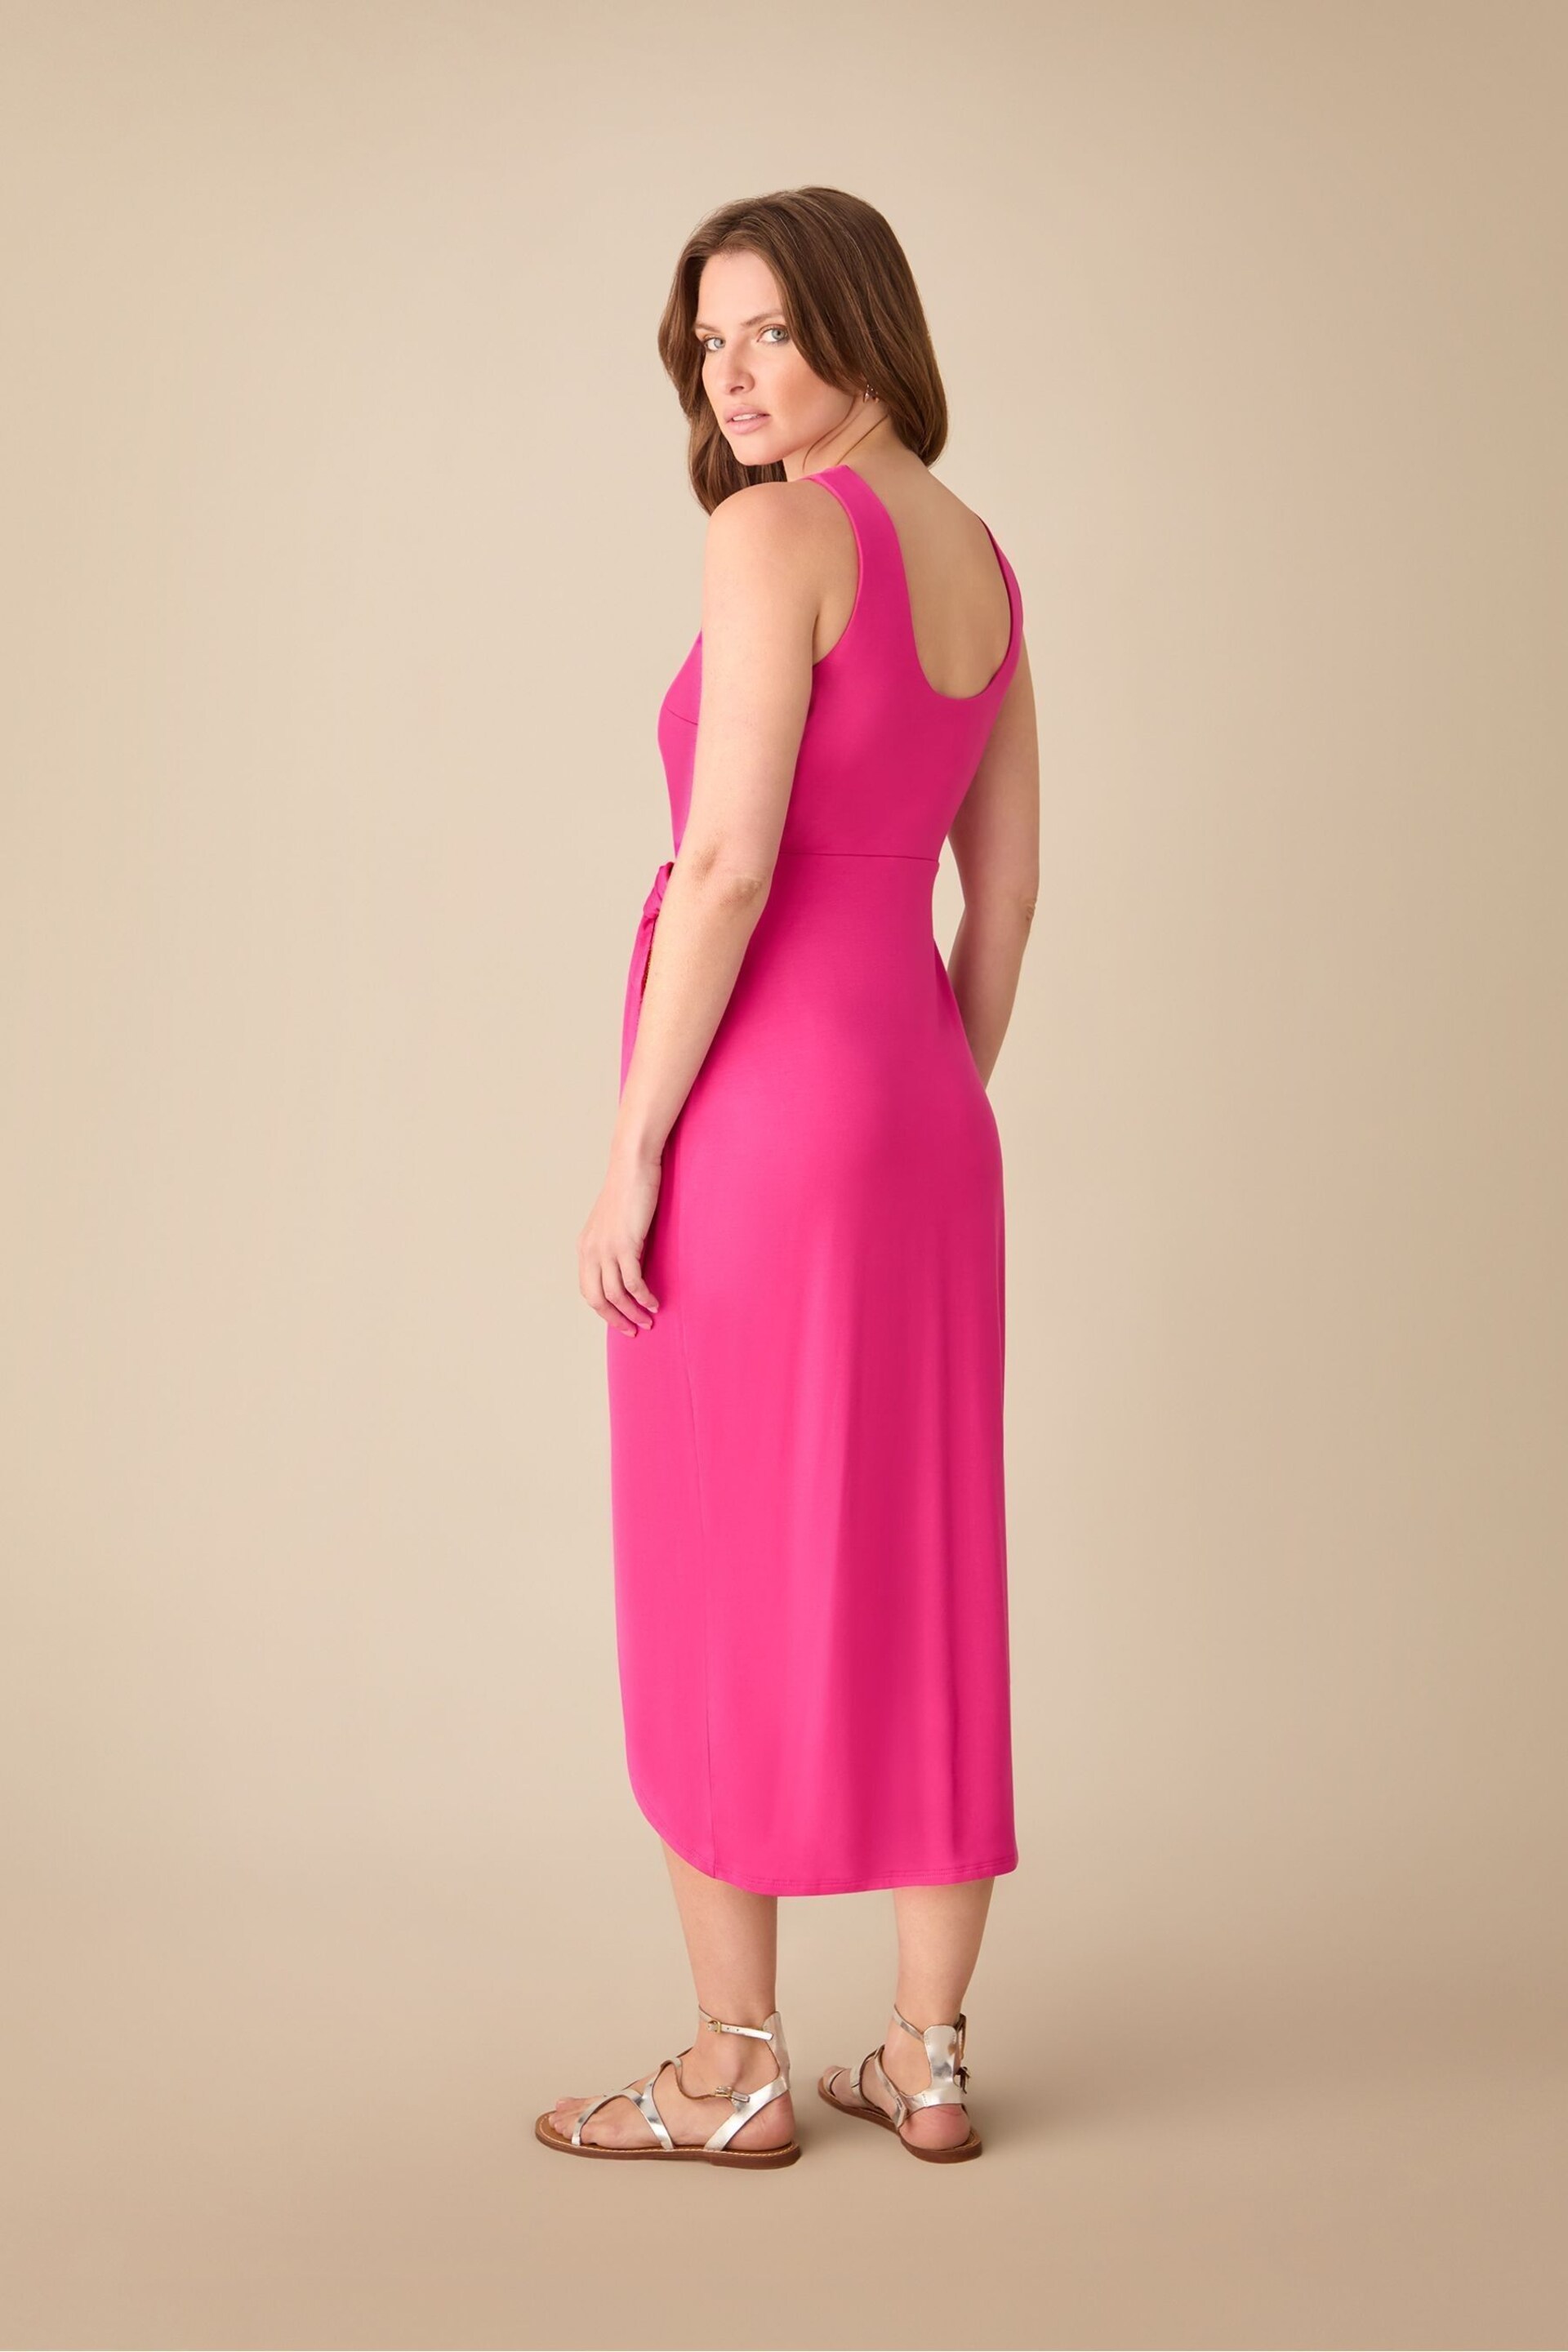 Ro&Zo Petite Pink Jersey Tie Waist Dress - Image 3 of 4